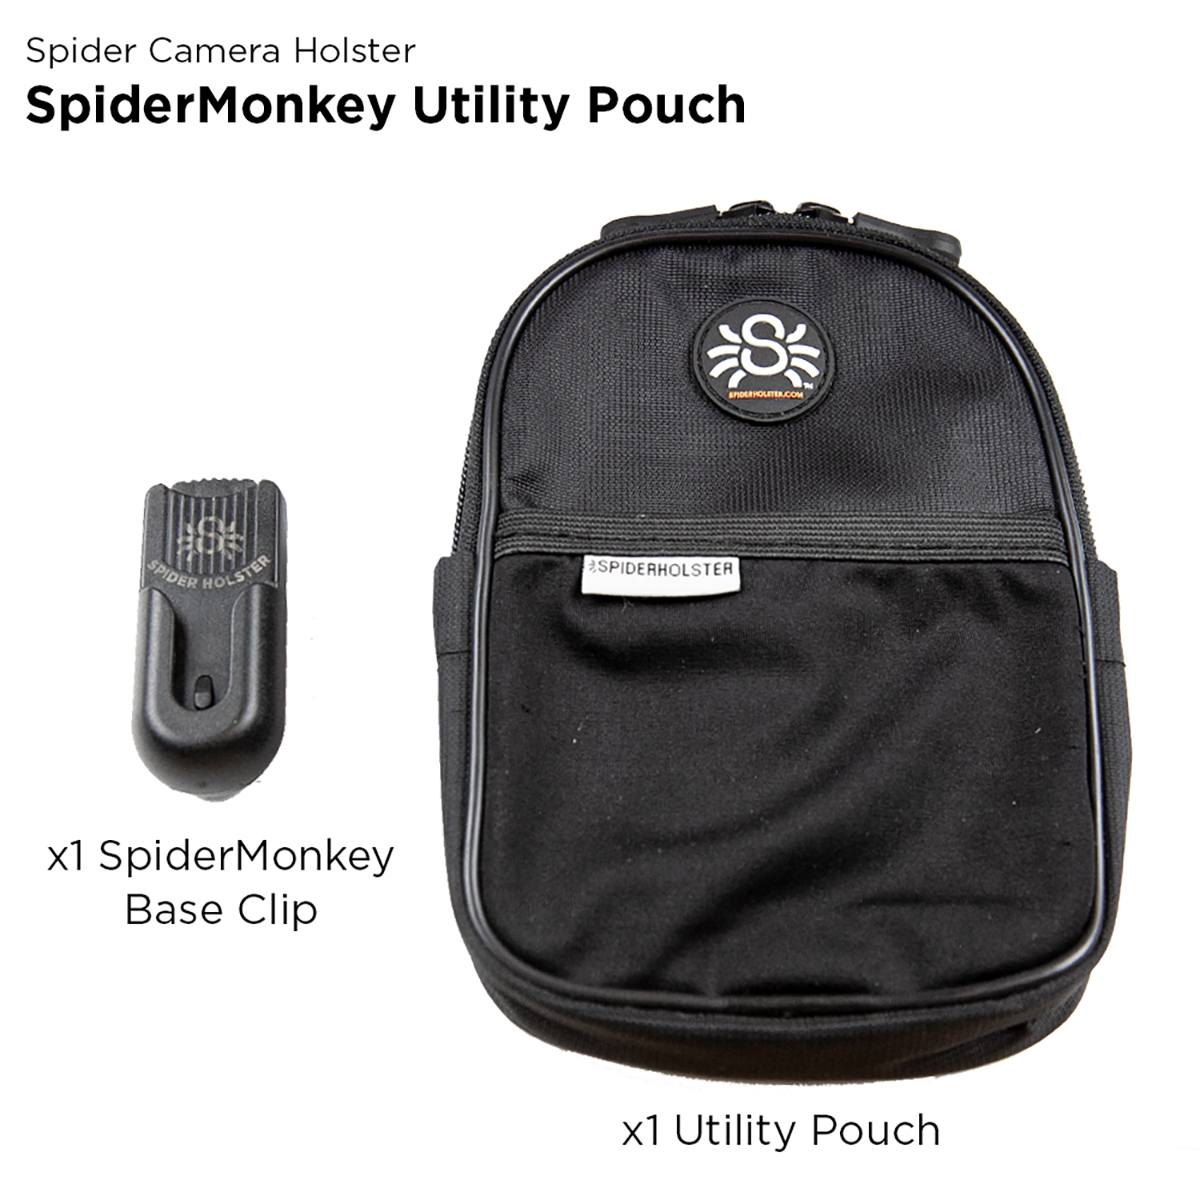 Spider Monkey Utility Pouch